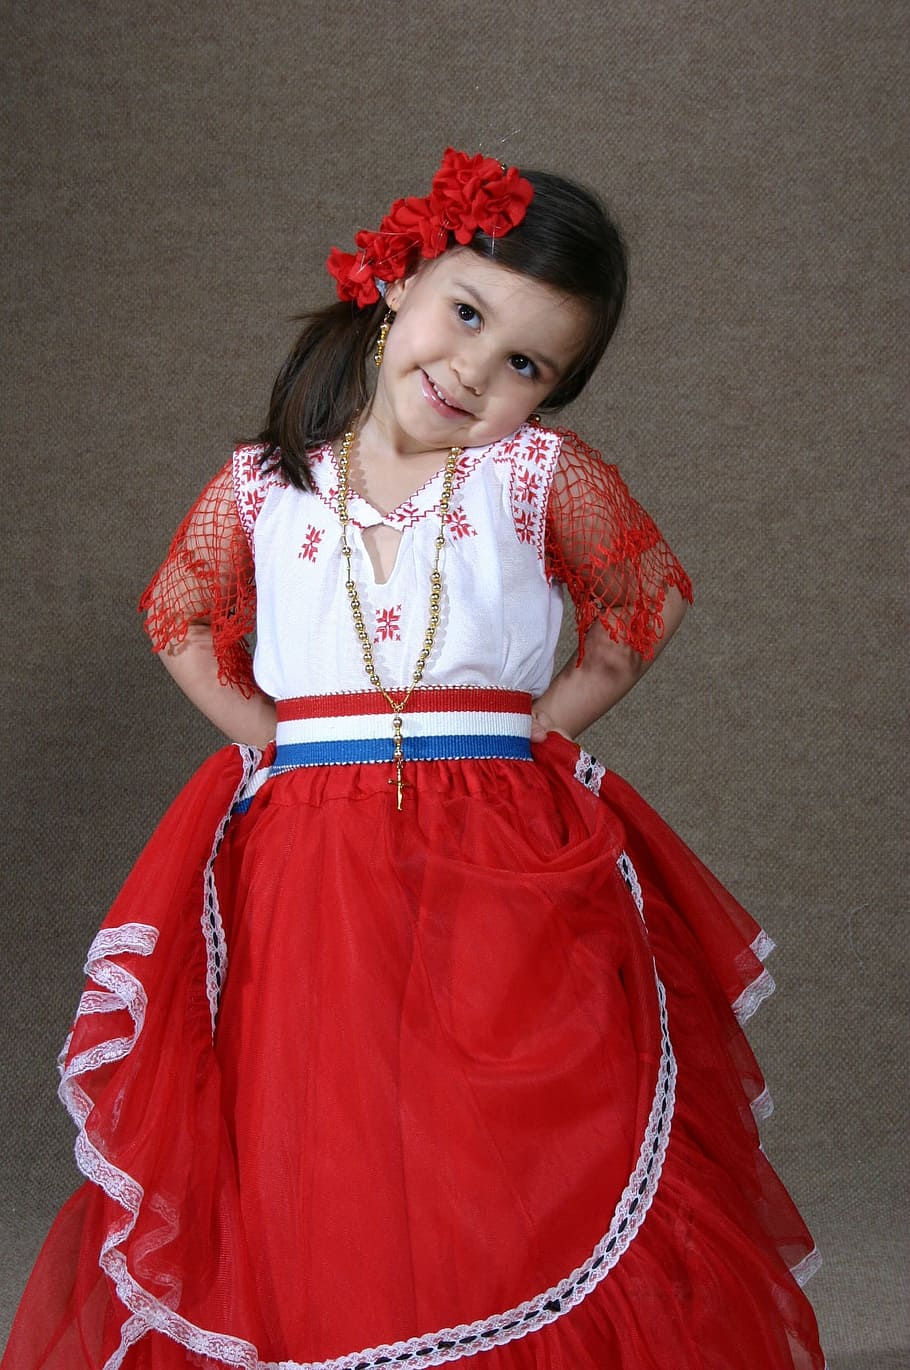 Masa kecil, Paraguay, Amerika Latin, berdandan, ostume, gadis, rok merah, tradisional, pakaian, Pakaian tradisional